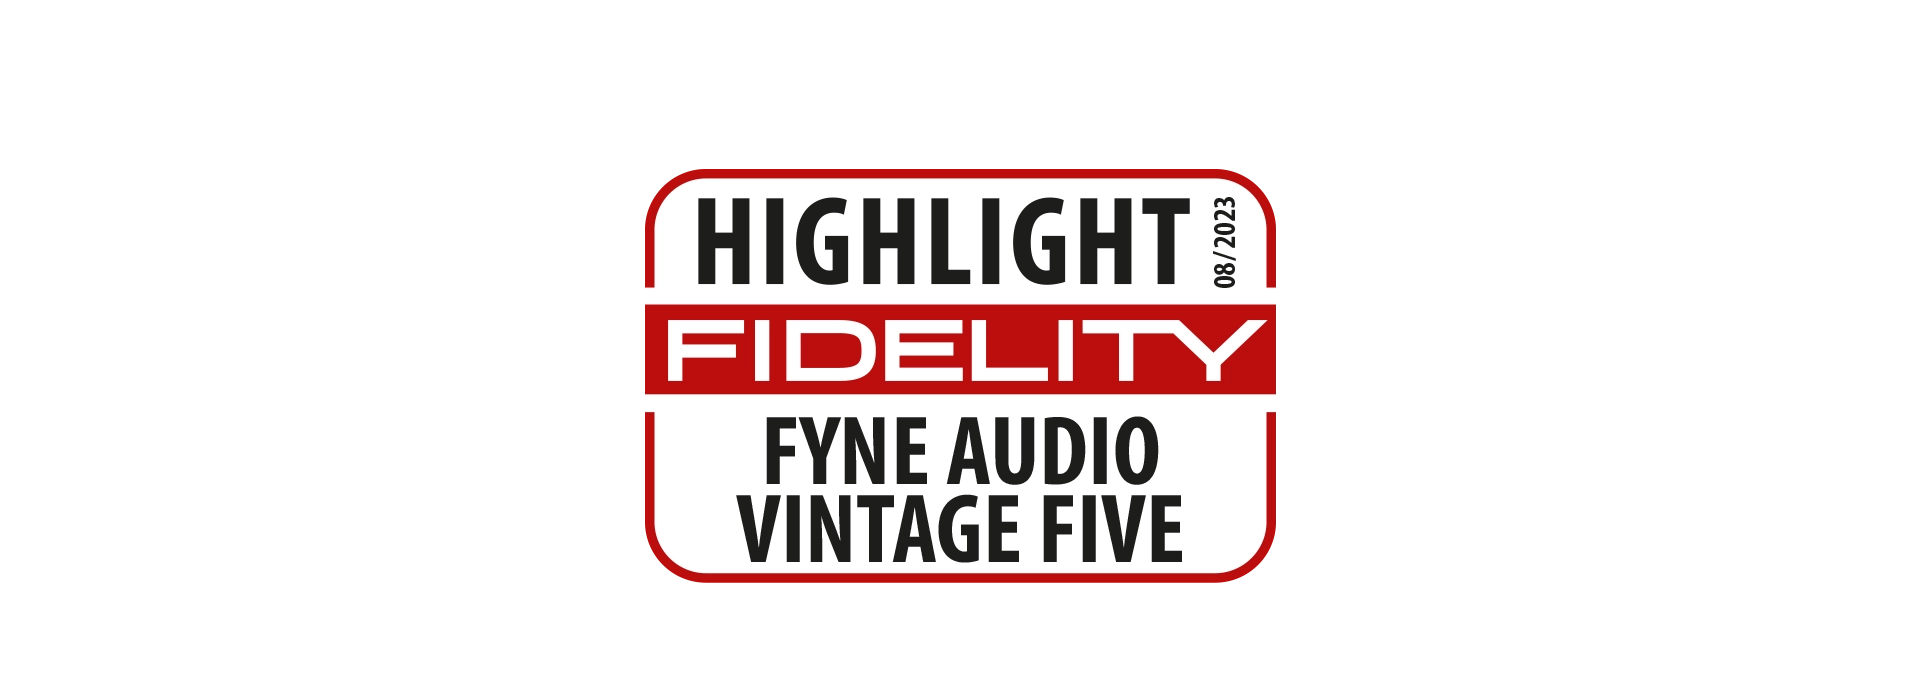 Fidelity Highlight | Fyne Audio Vintage Five